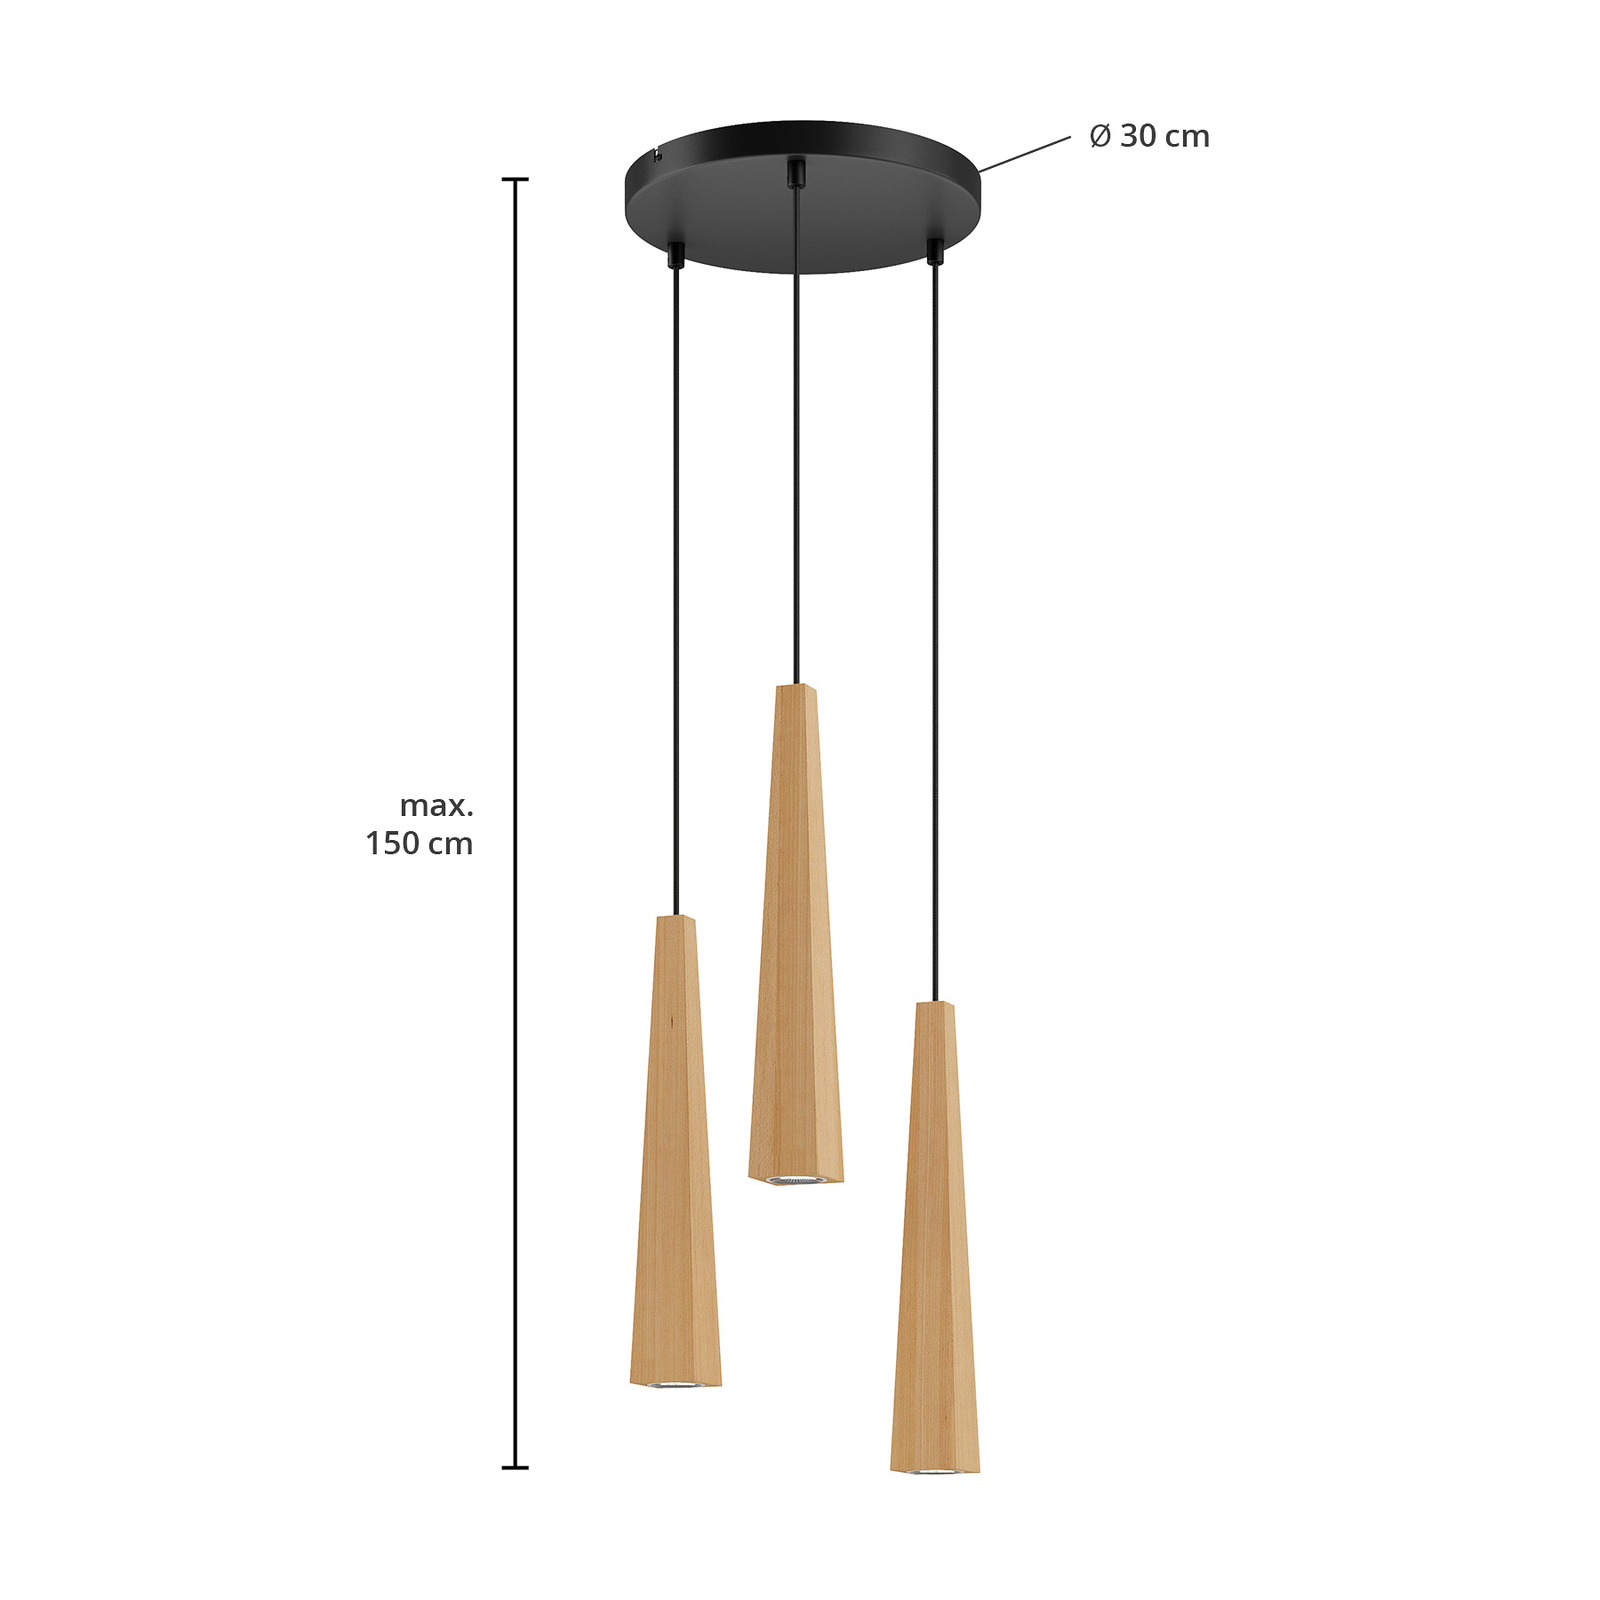 Envolight Wooden Square Cones hanglamp rond